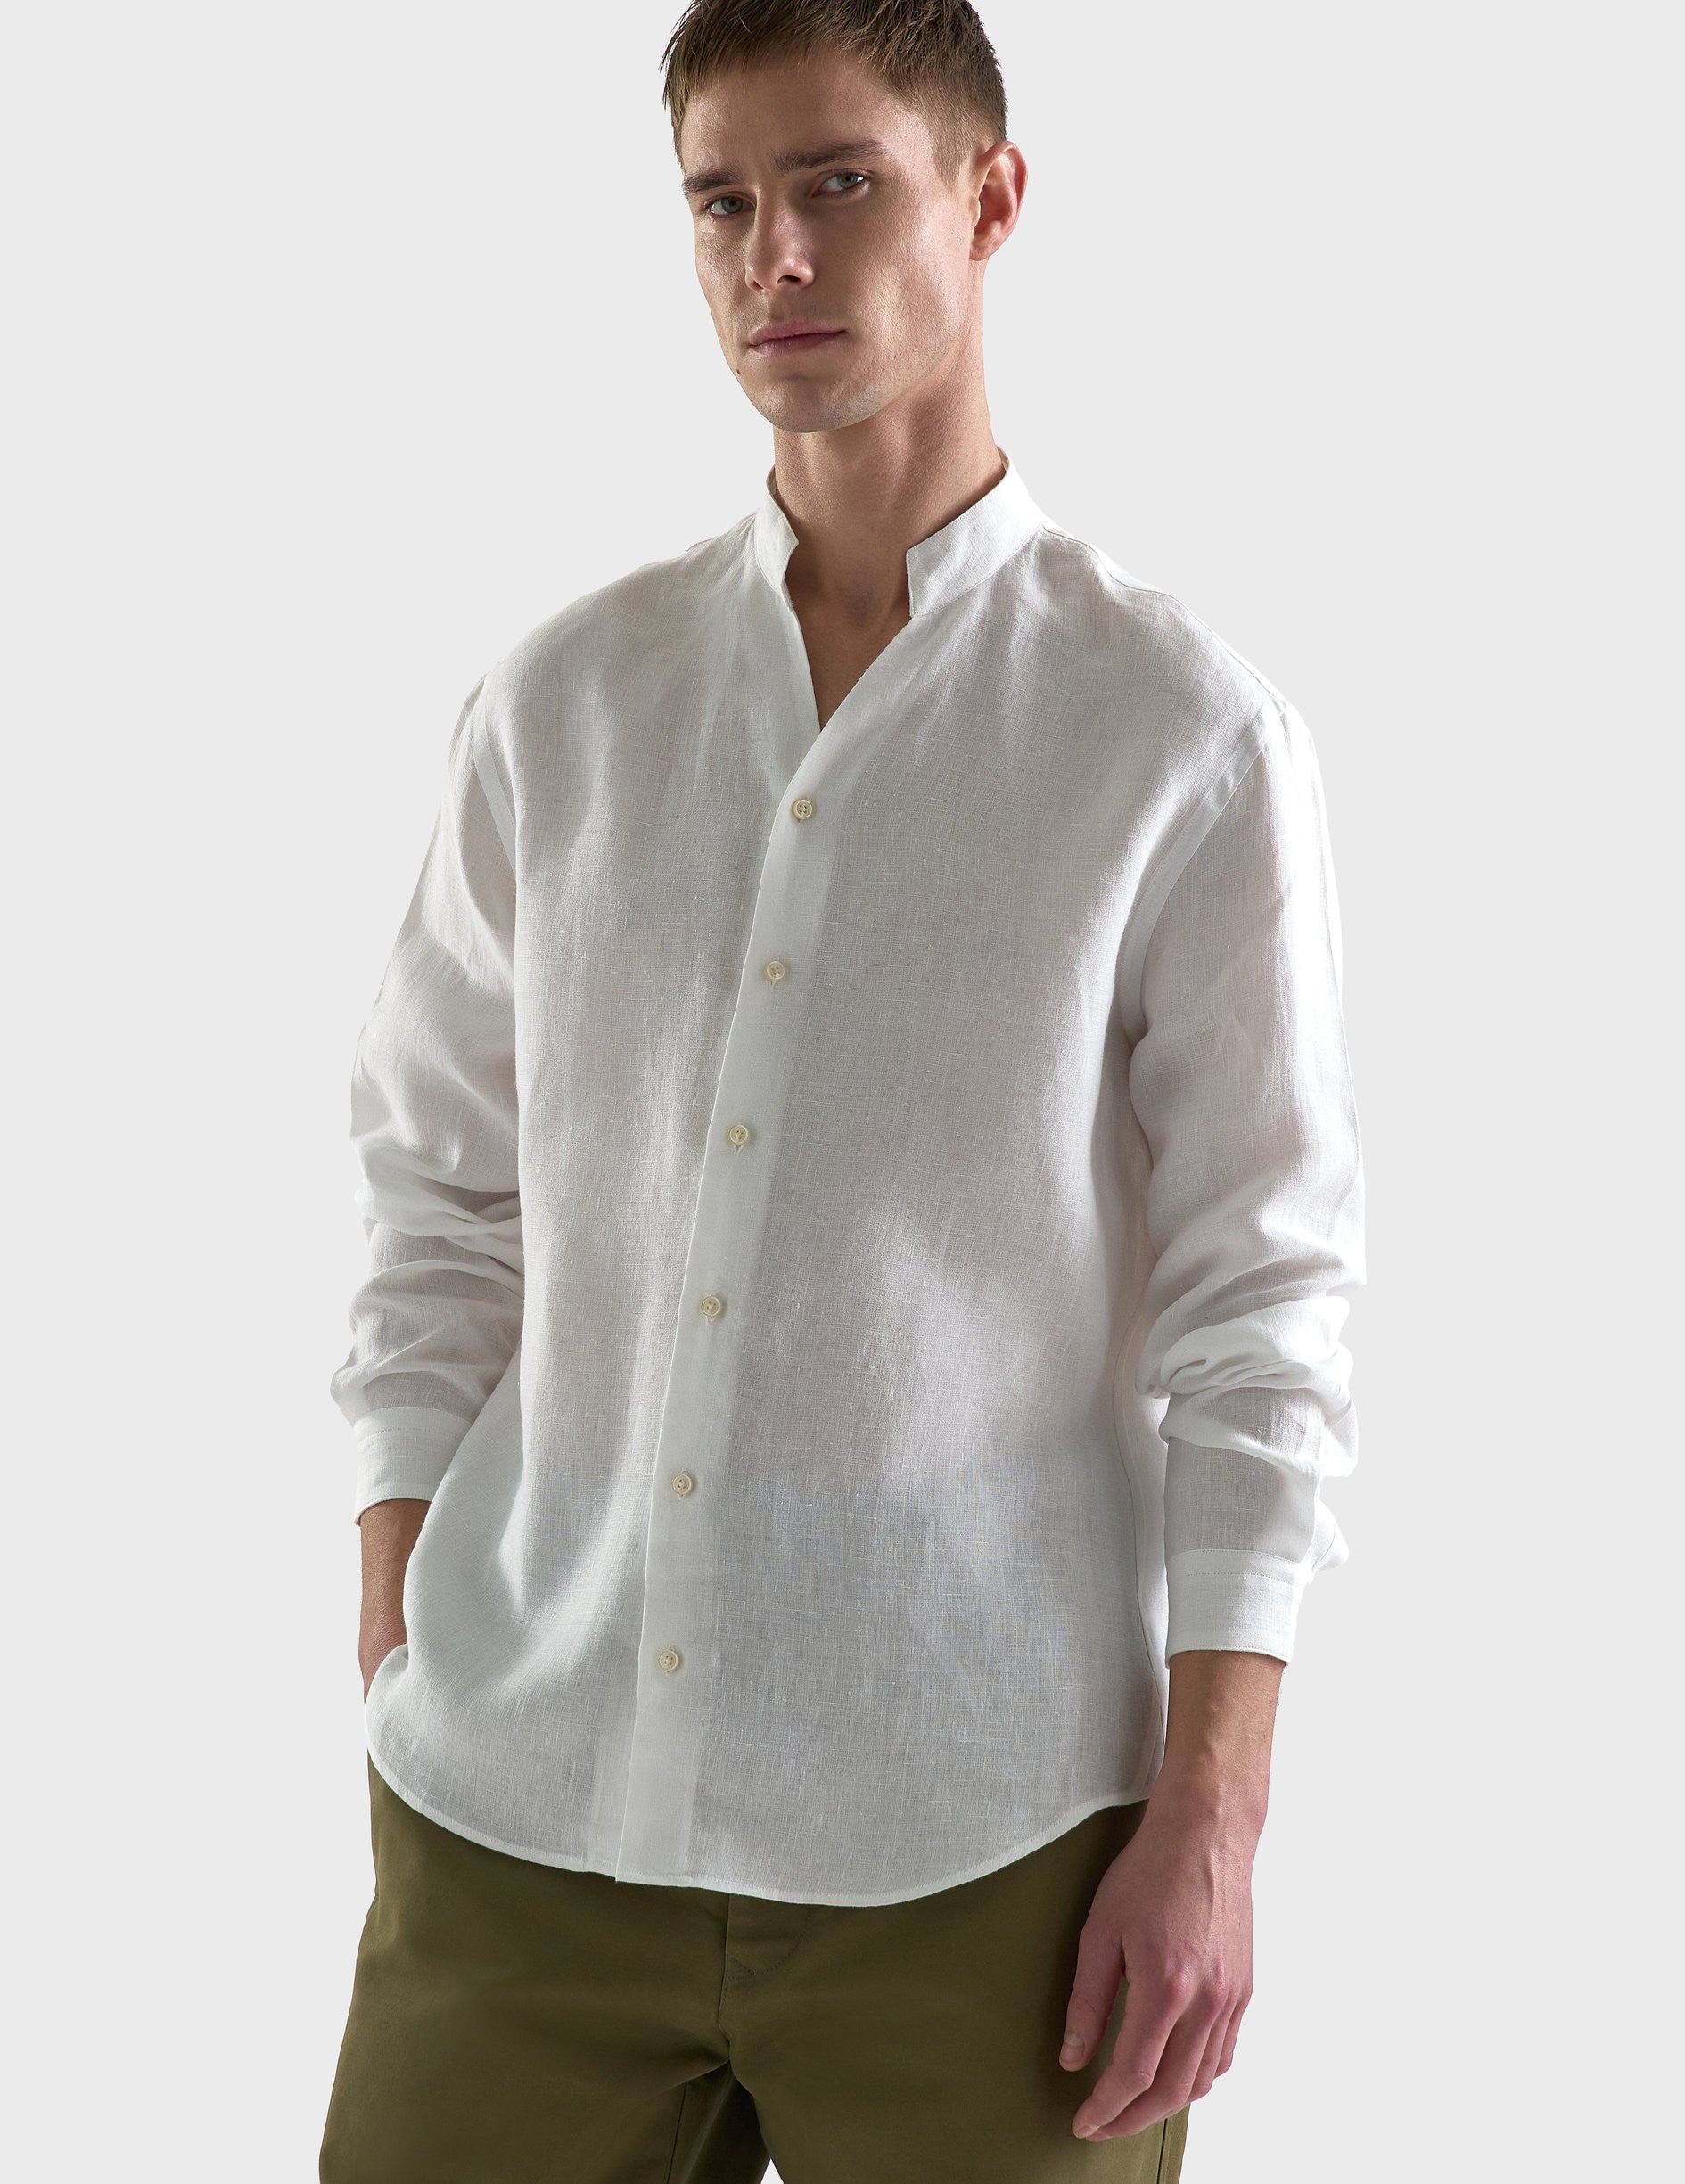 Carl white linen shirt